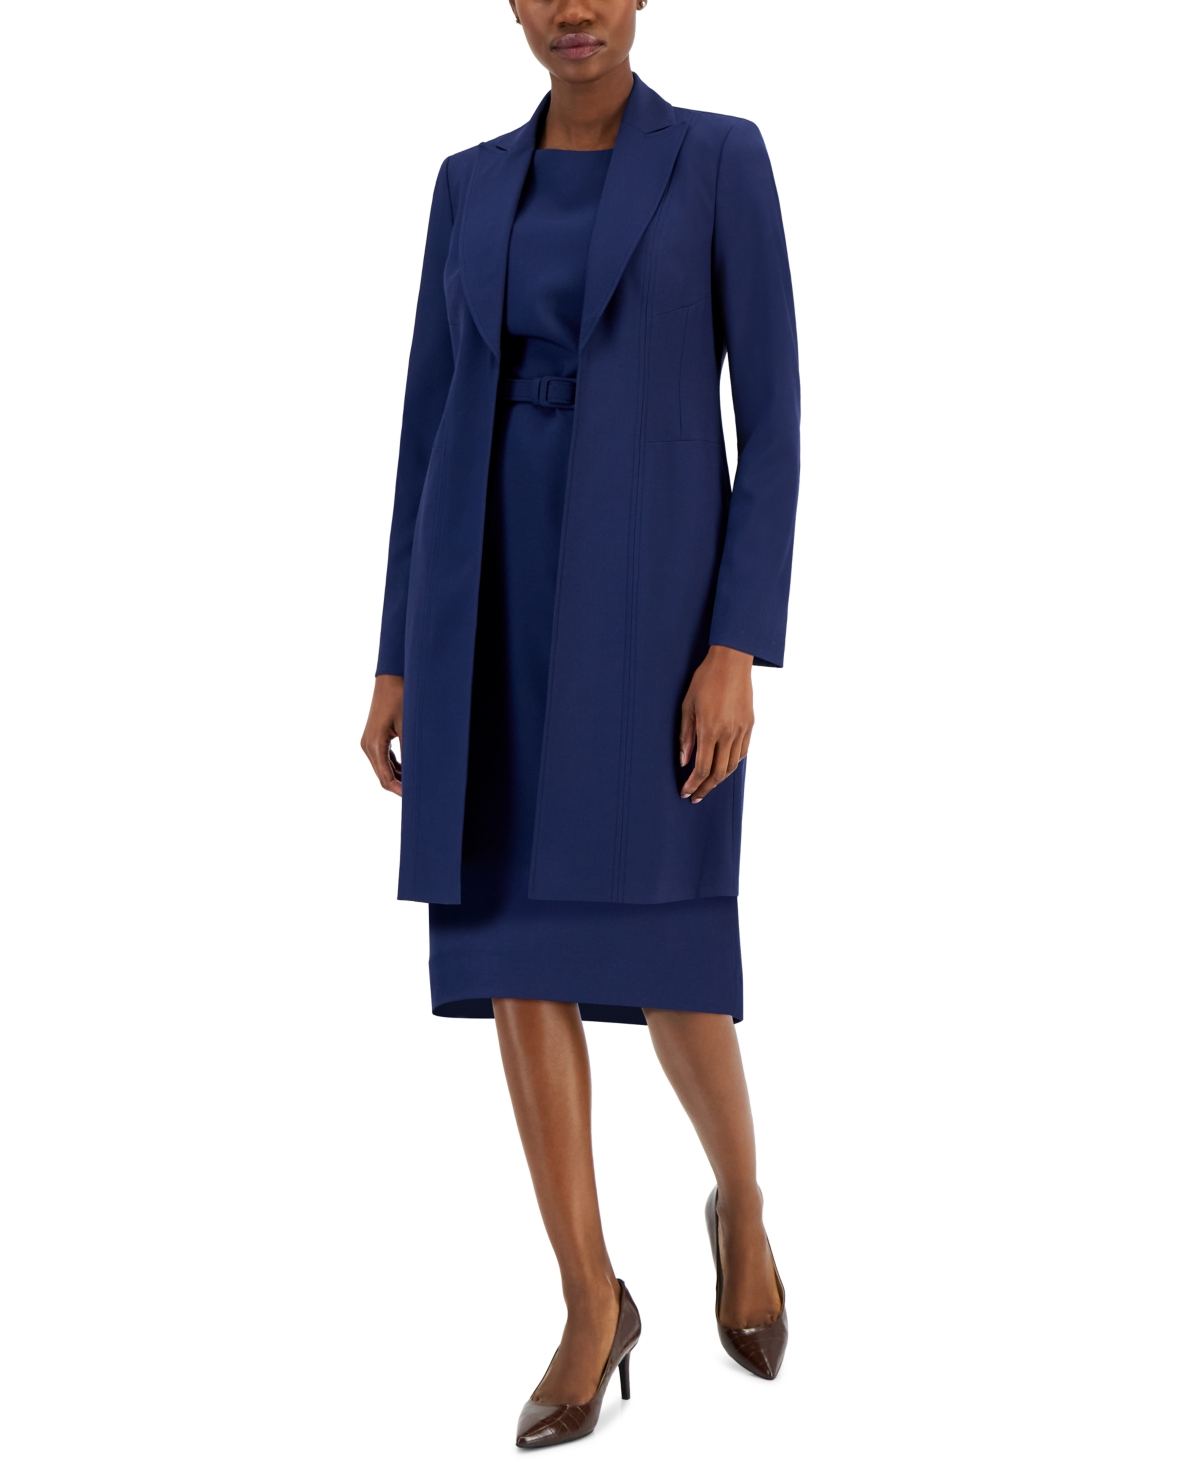 Women's Longline Jacket Topper & Belted Sleeveless Sheath Dress - Bright Navy